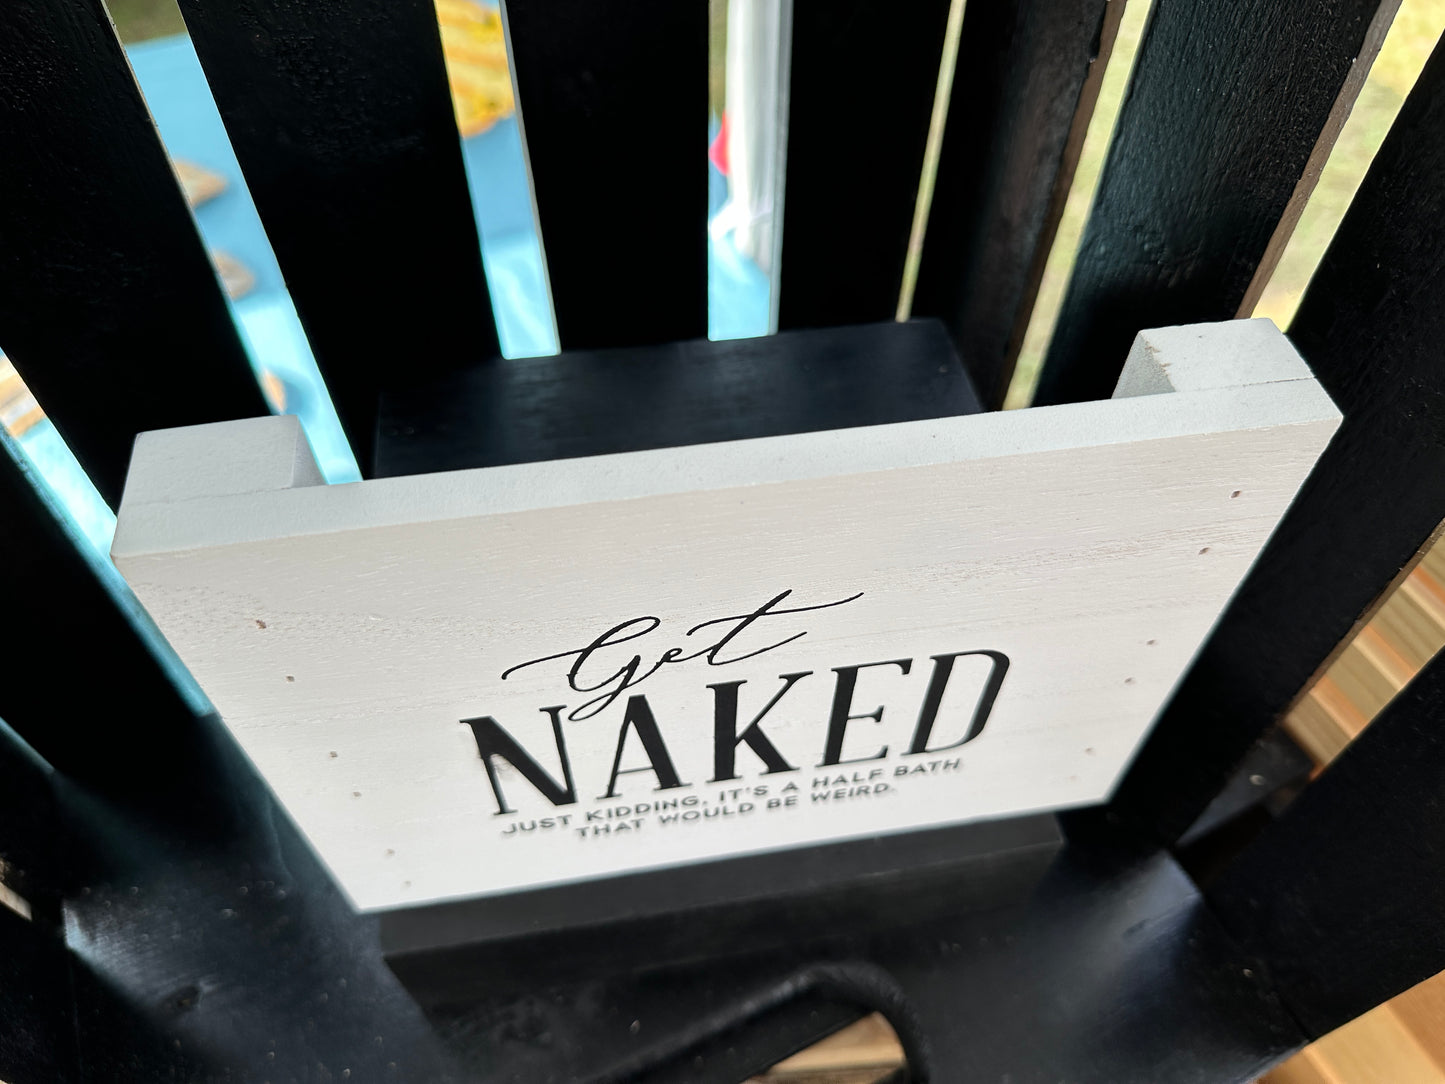 Get Naked 5x7" Sign